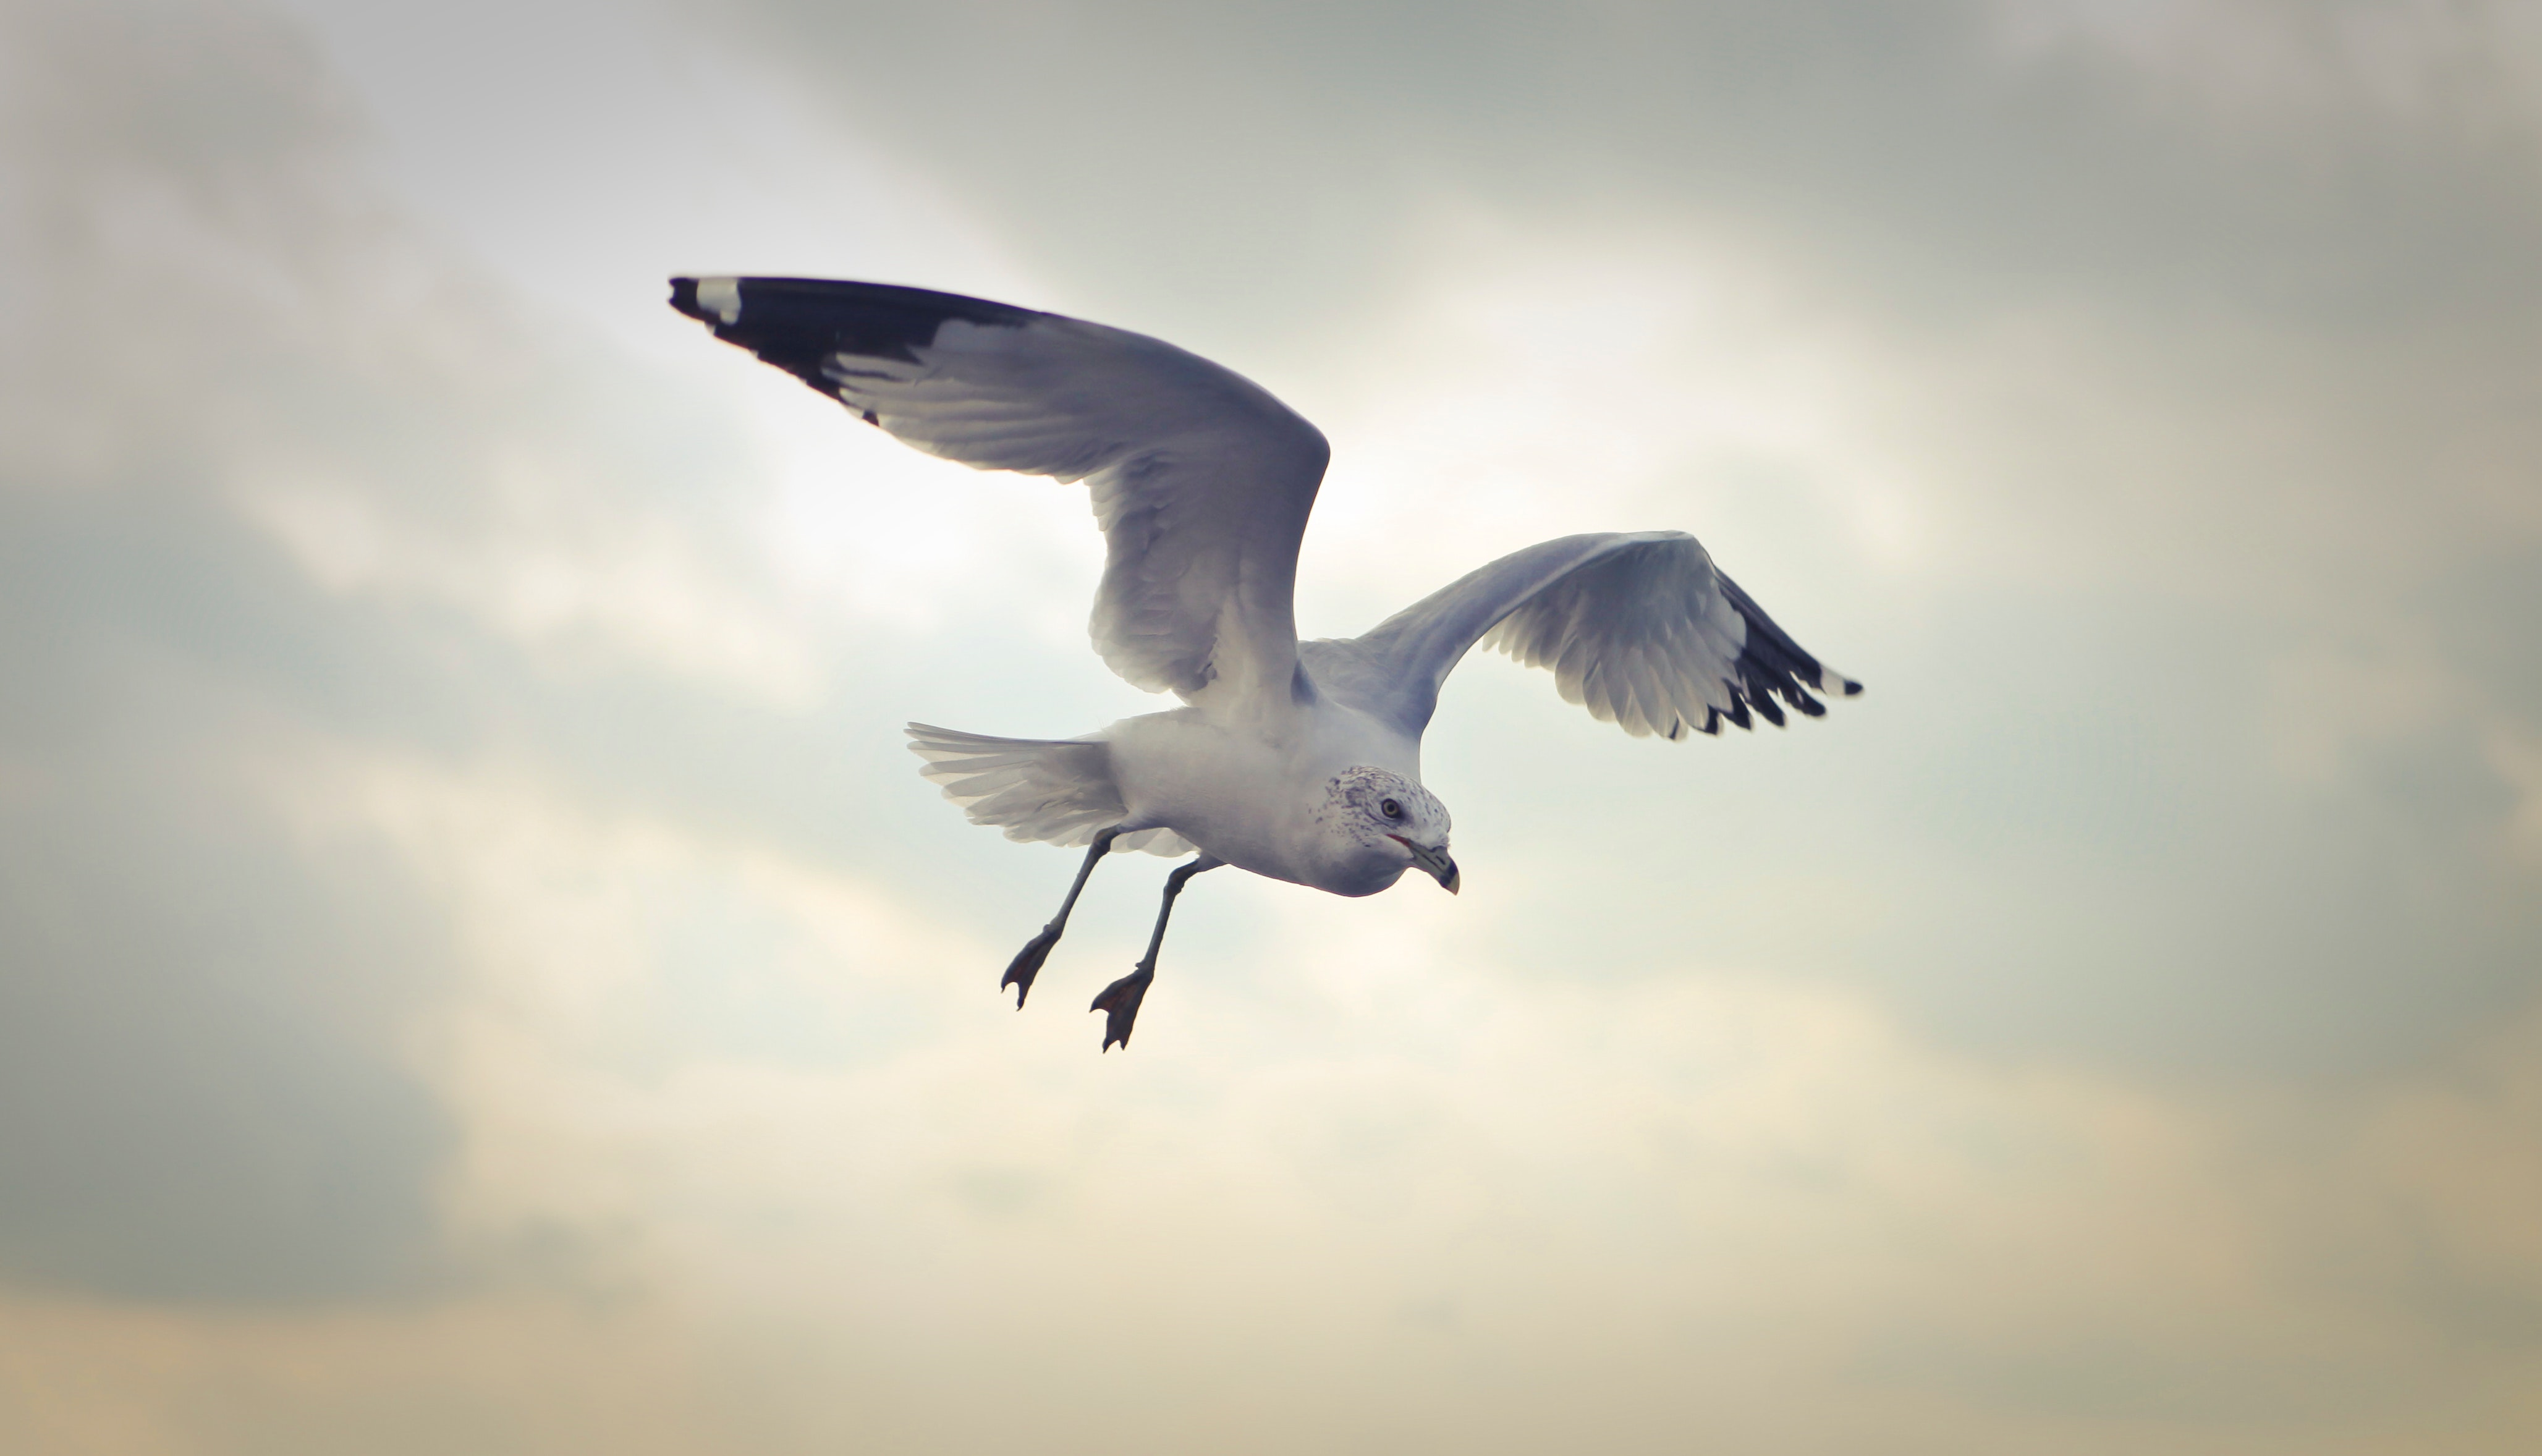 Ring-billed gull flying at daytime photo